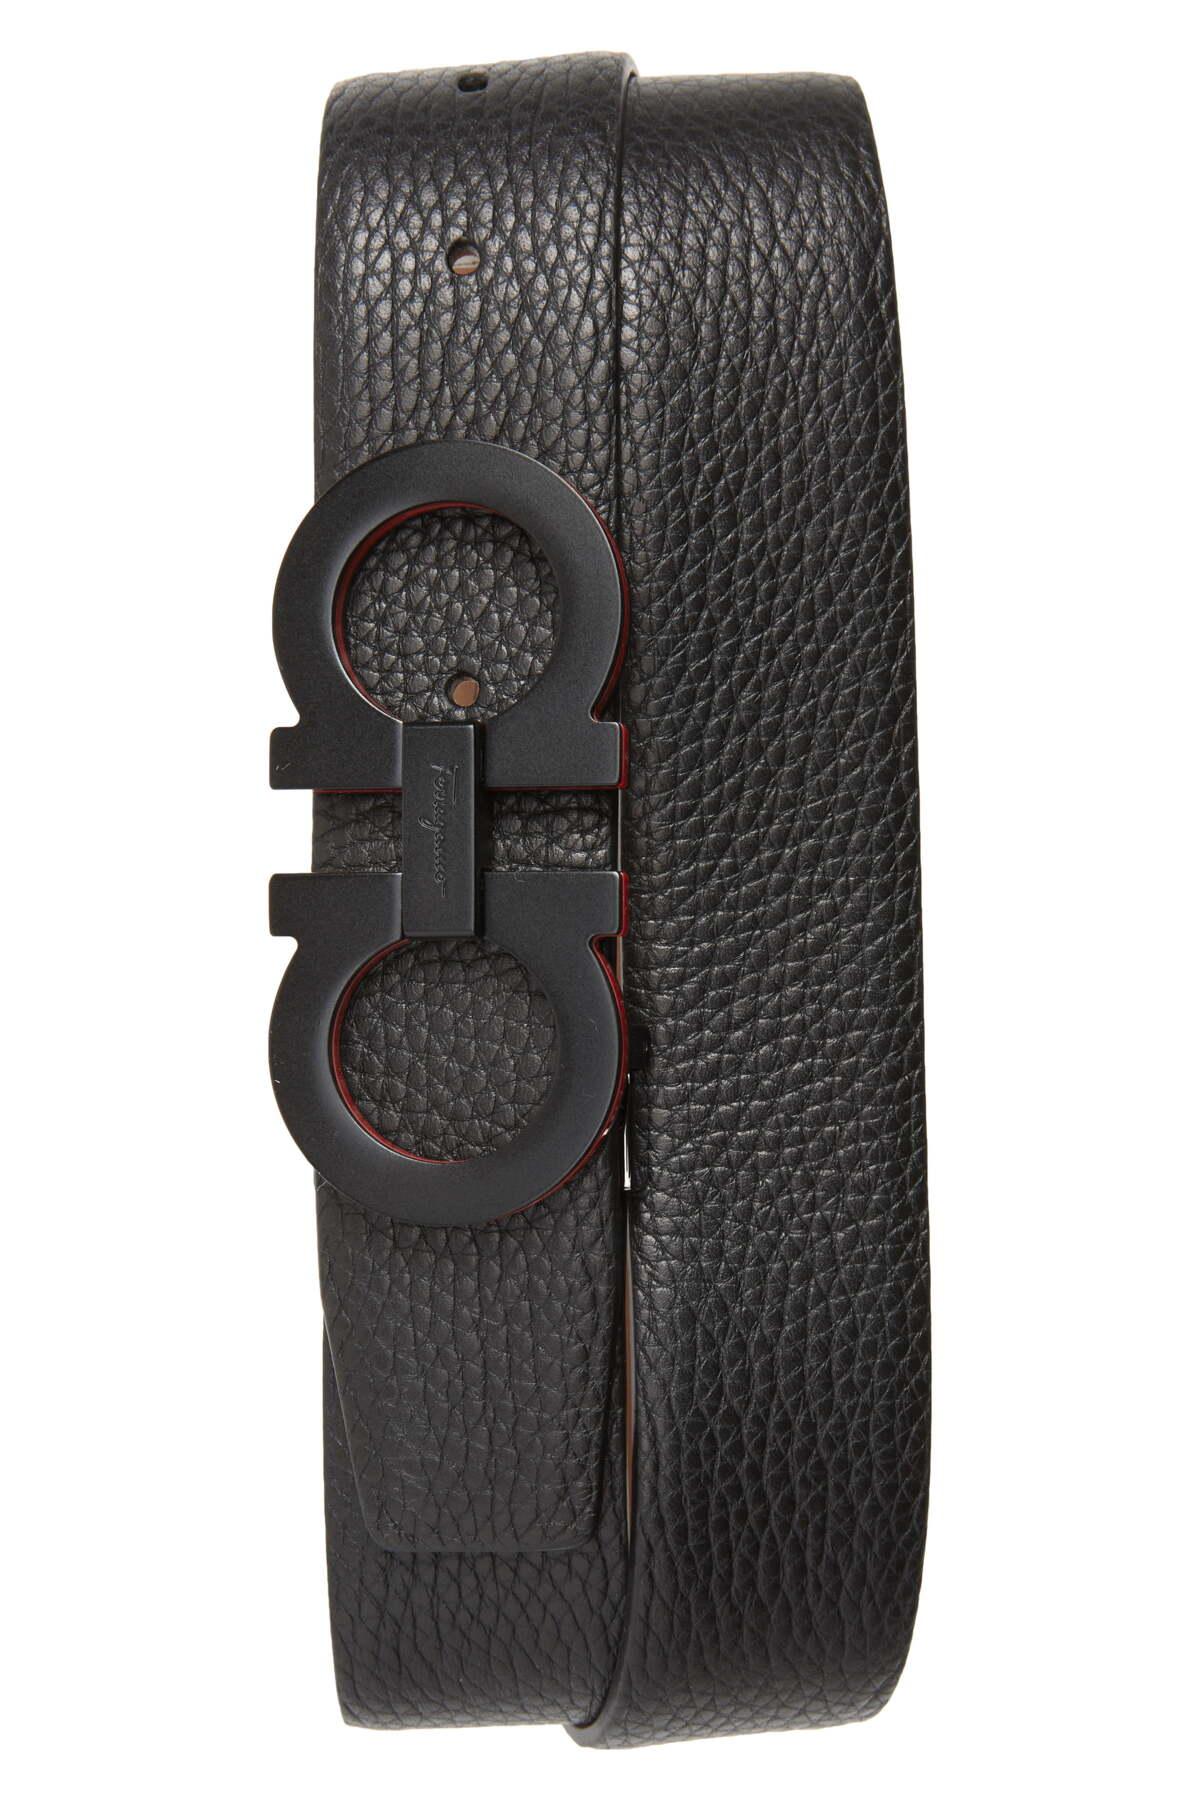 Ferragamo Leather Adjustable Belt - 679880 in Nero (Black) for Men 